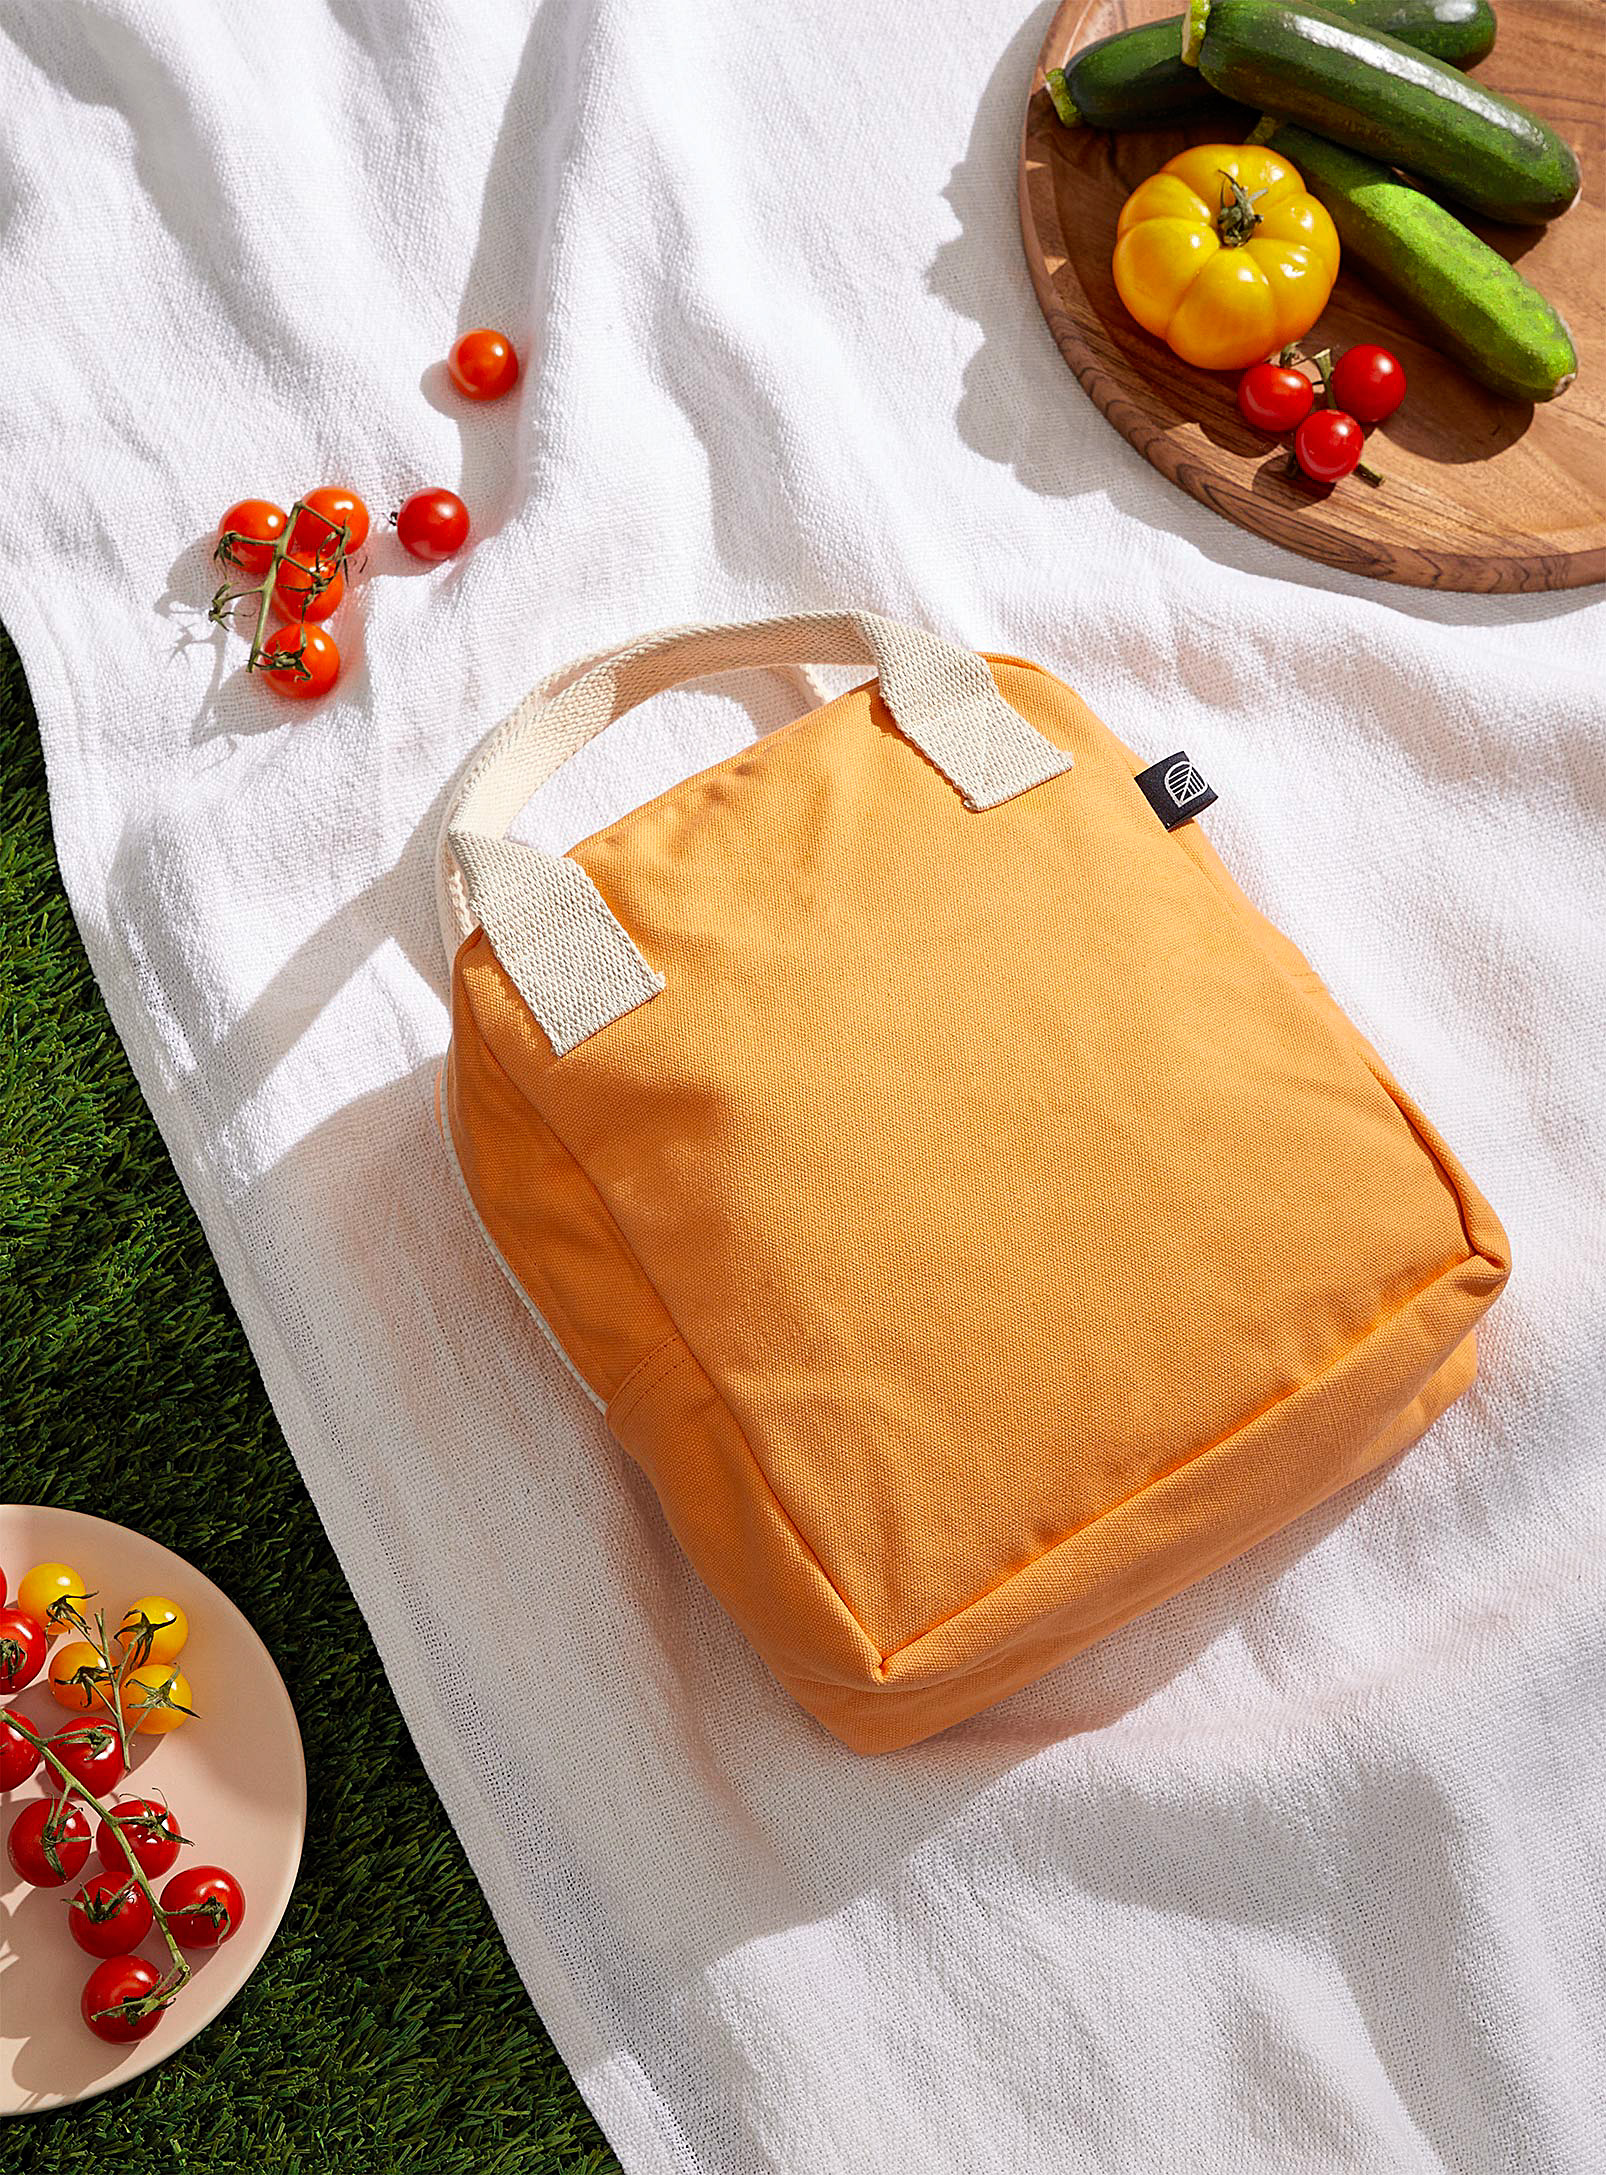 Simons Maison Colourful Organic Cotton Lunch Bag In Orange